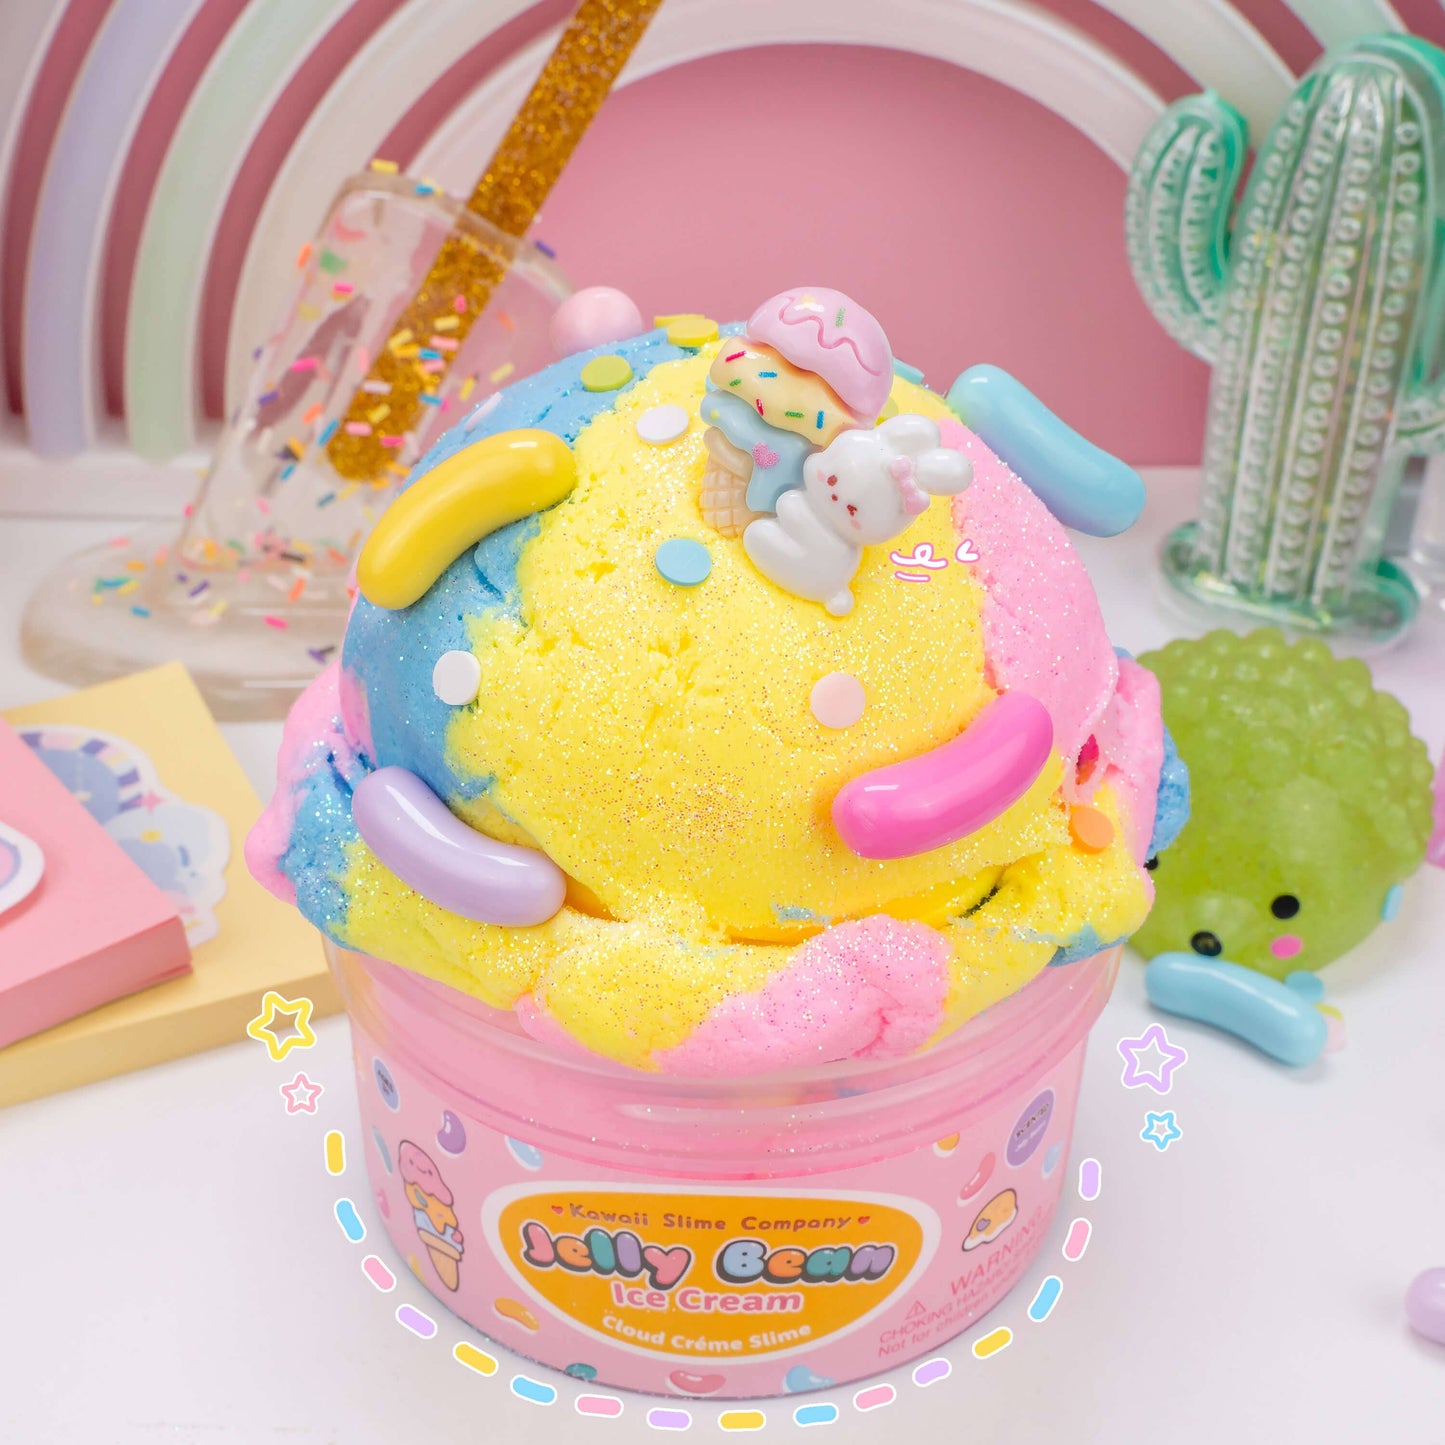 Slime - Jelly Bean Ice Cream Cloud Creme